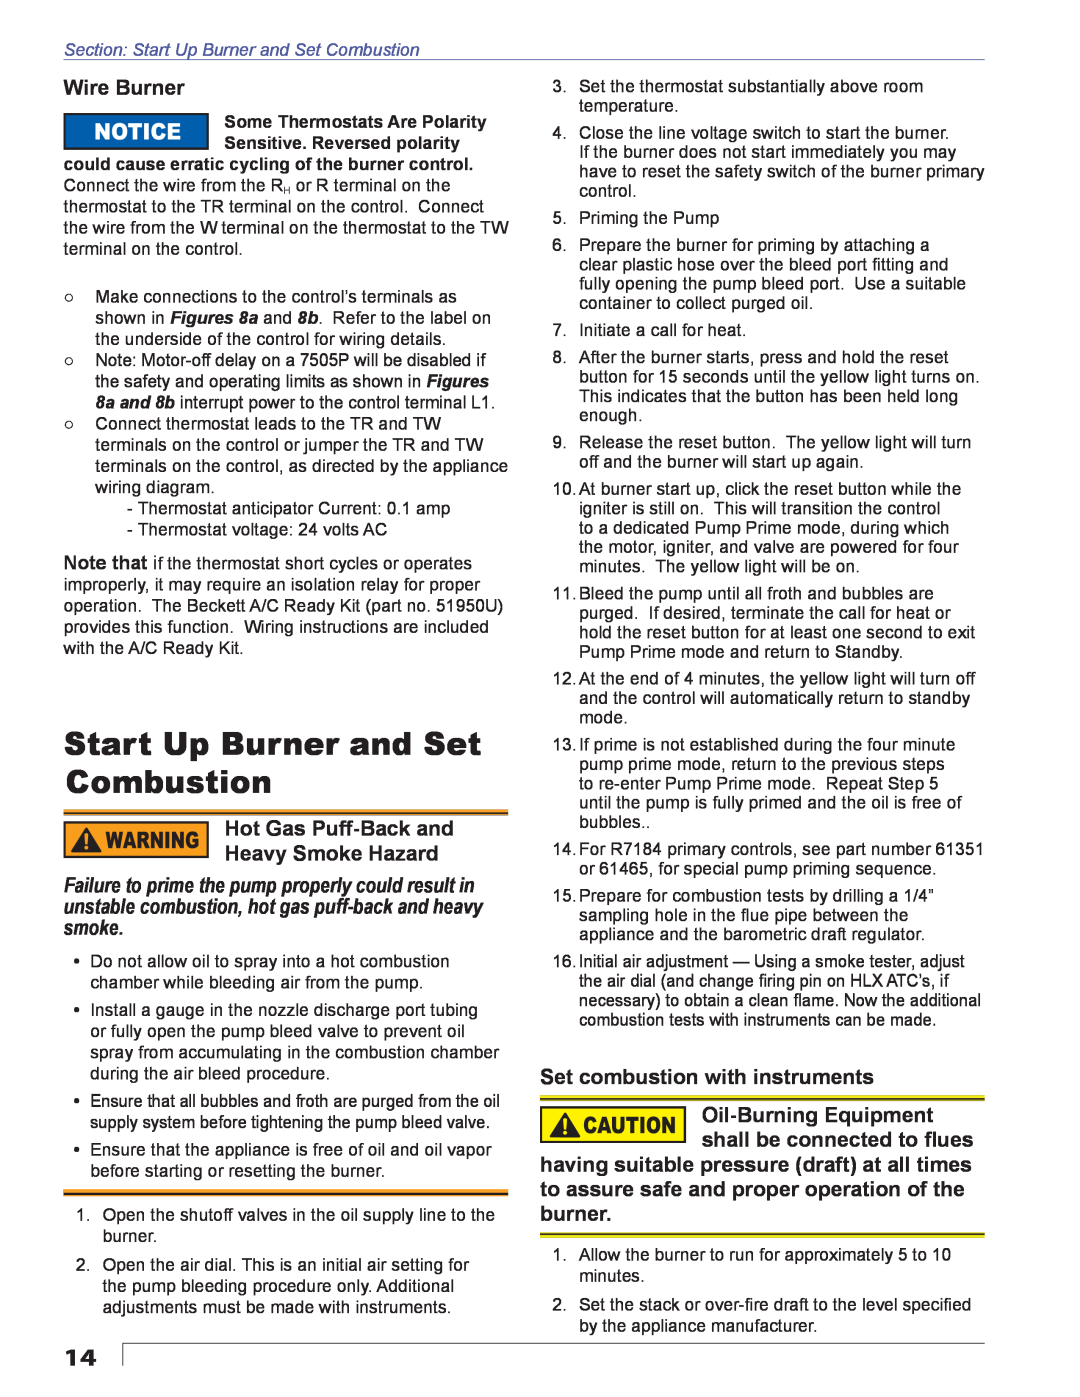 Beckett AFII manual Start Up Burner and Set Combustion, Wire Burner, Hot Gas Puff-Back and Heavy Smoke Hazard 